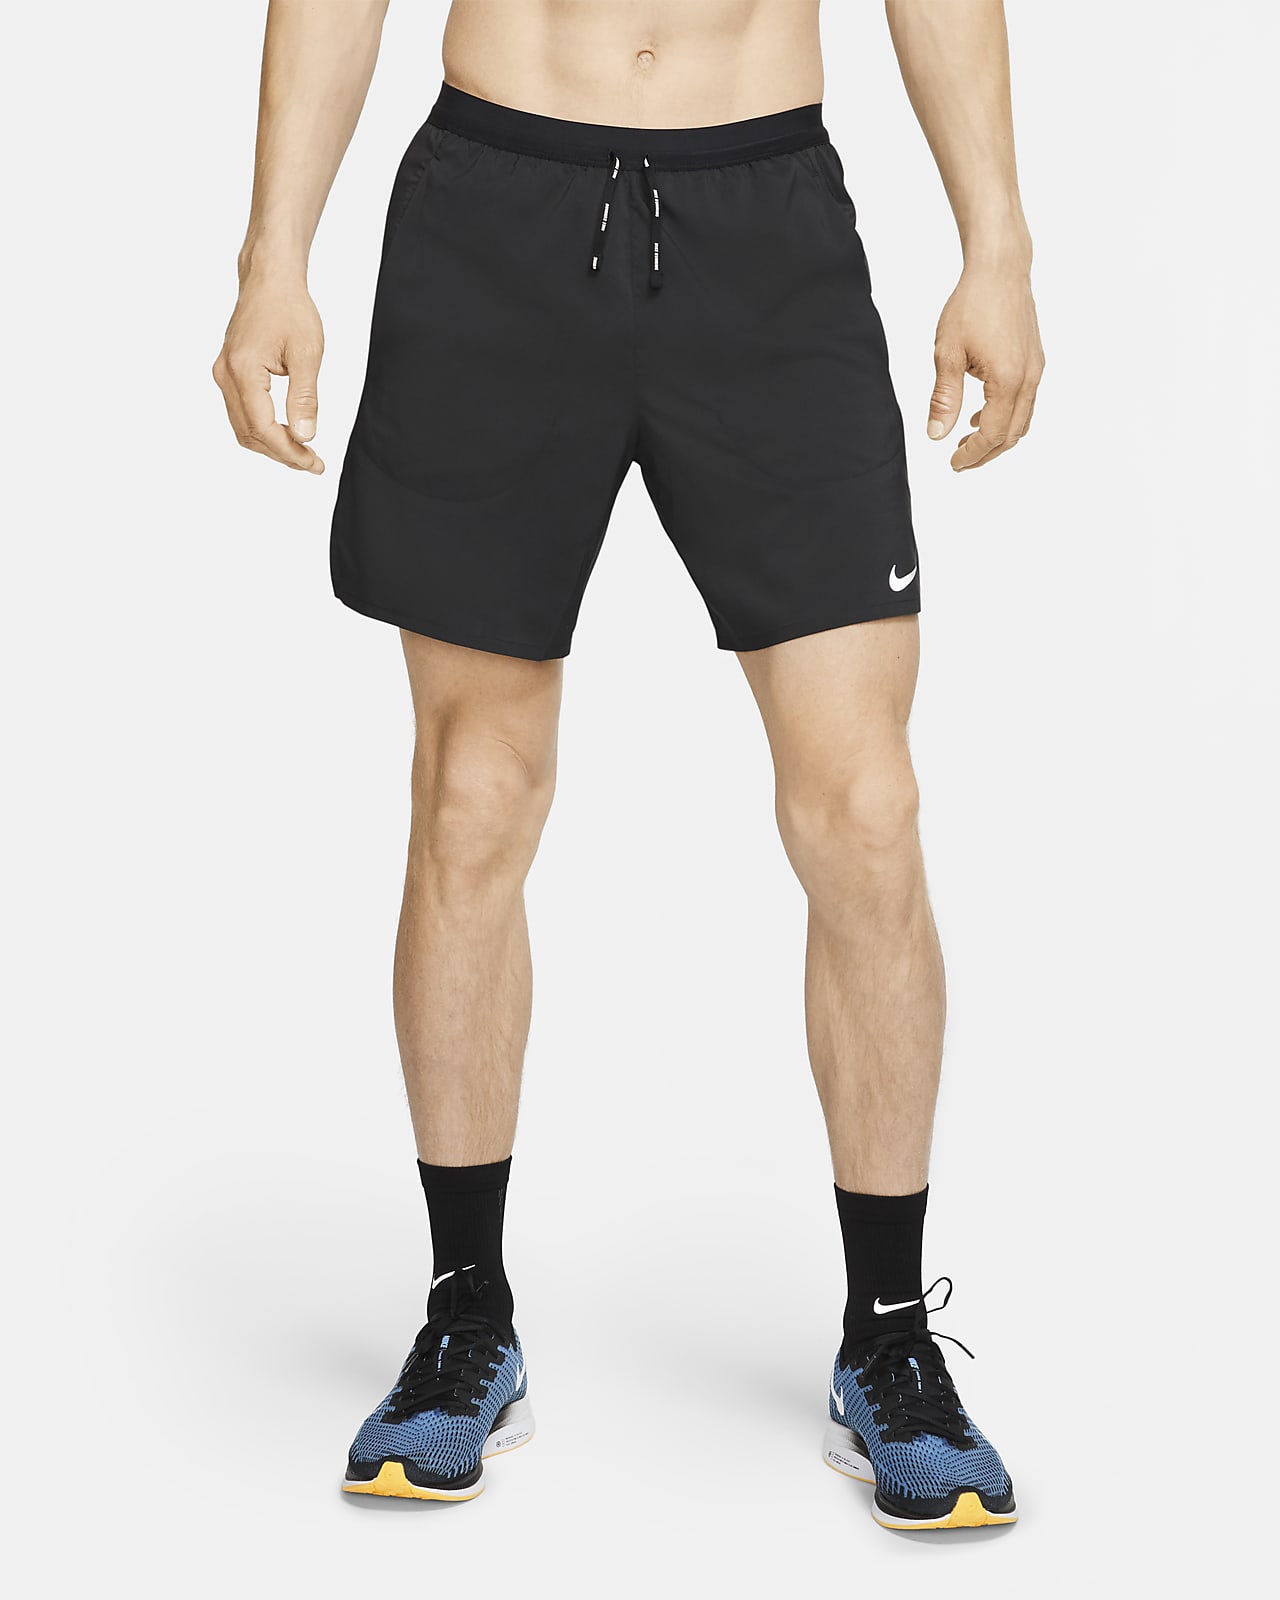 nike 2 in 1 running shorts mens uk